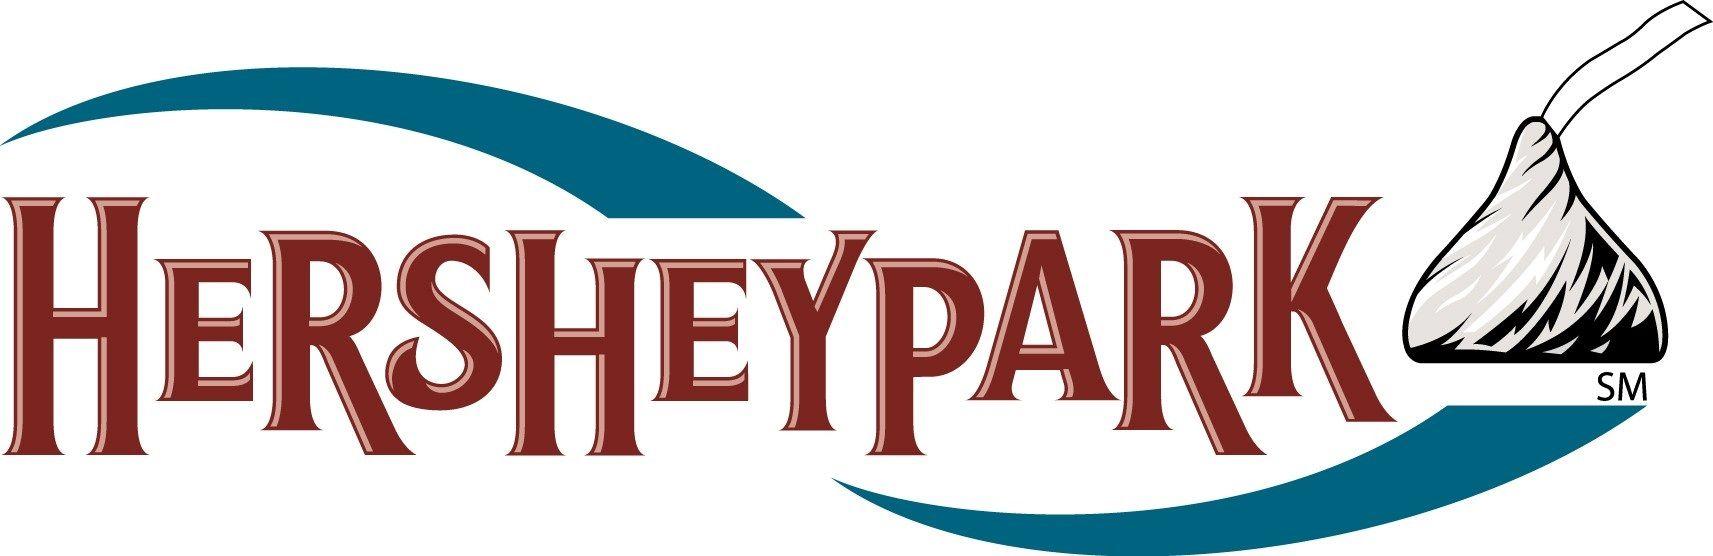 Hersheypark Logo - Hersheypark